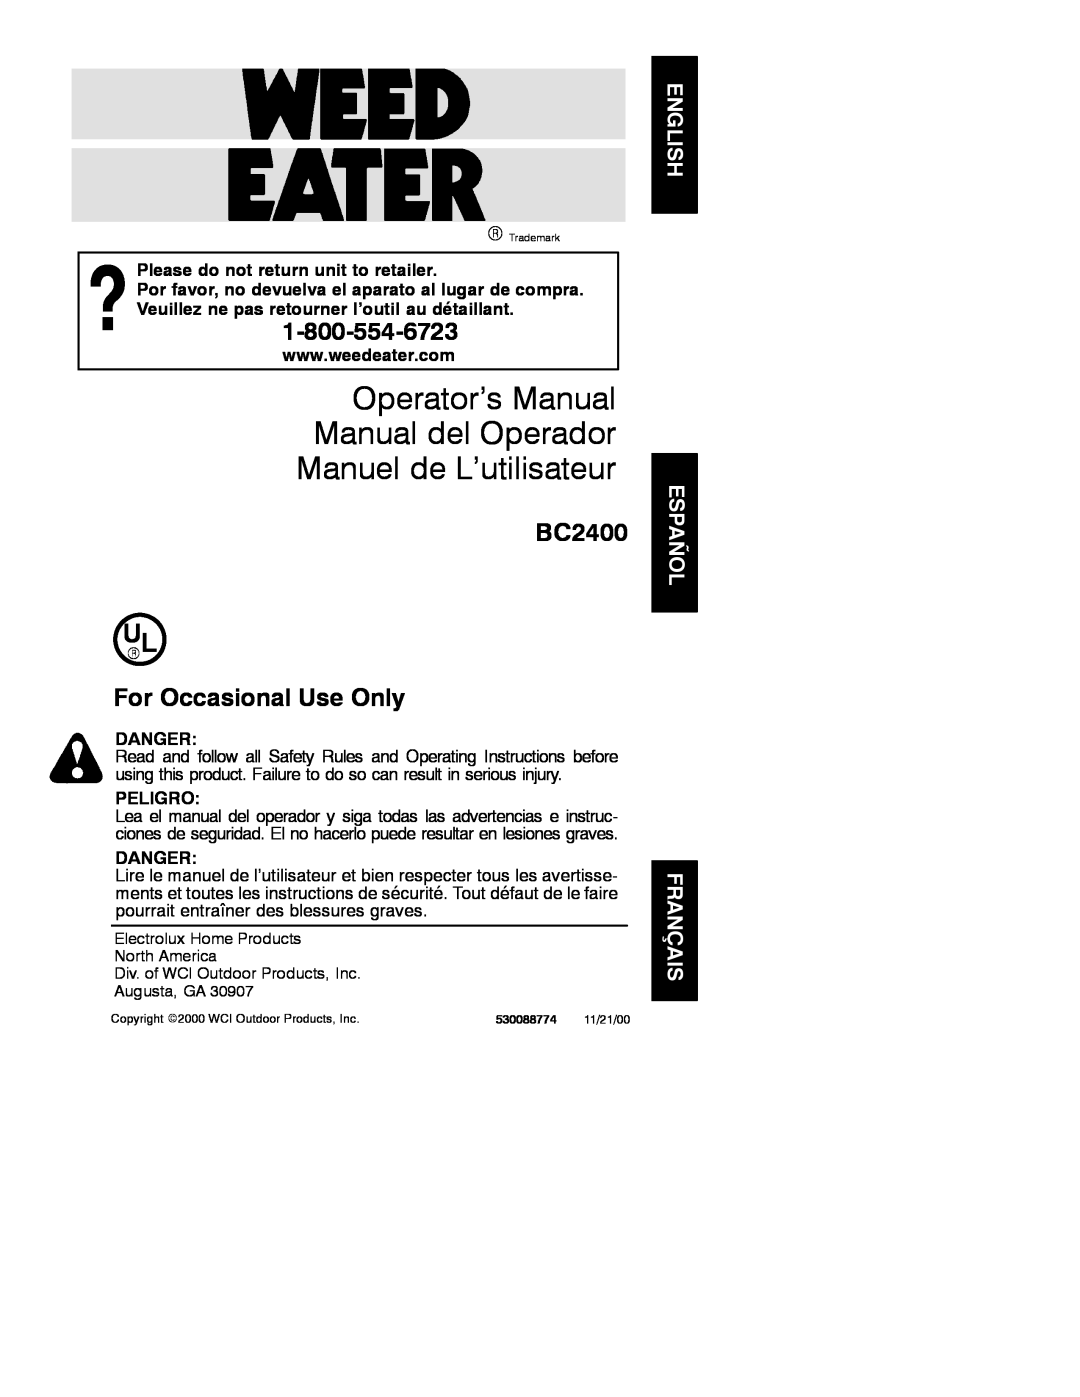 Weed Eater 530088774 manual Operator’s Manual Manual del Operador Manuel de L’utilisateur, BC2400, For Occasional Use Only 